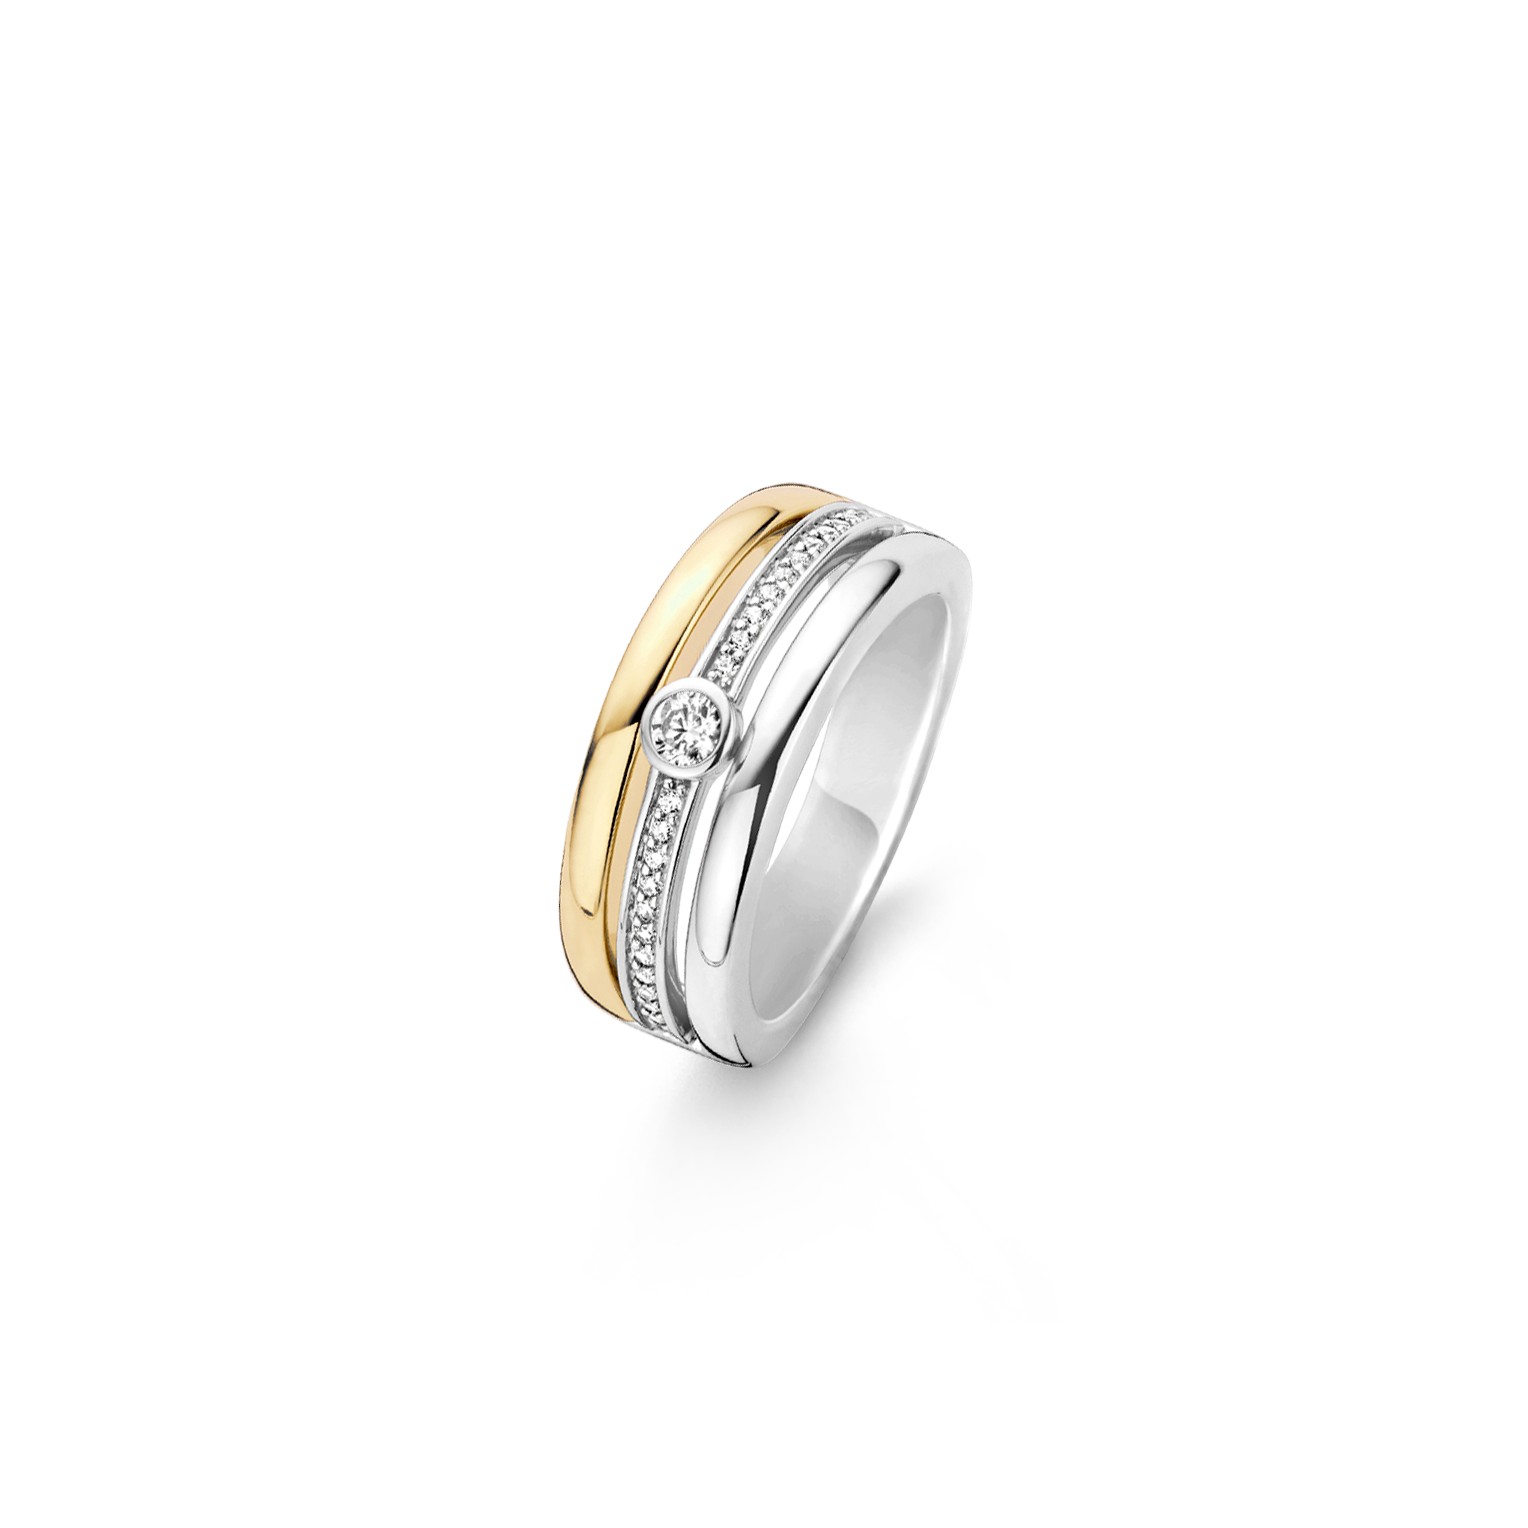 TI SENTO - Milano Ring 12094ZY Gala Jewelers Inc. White Oak, PA